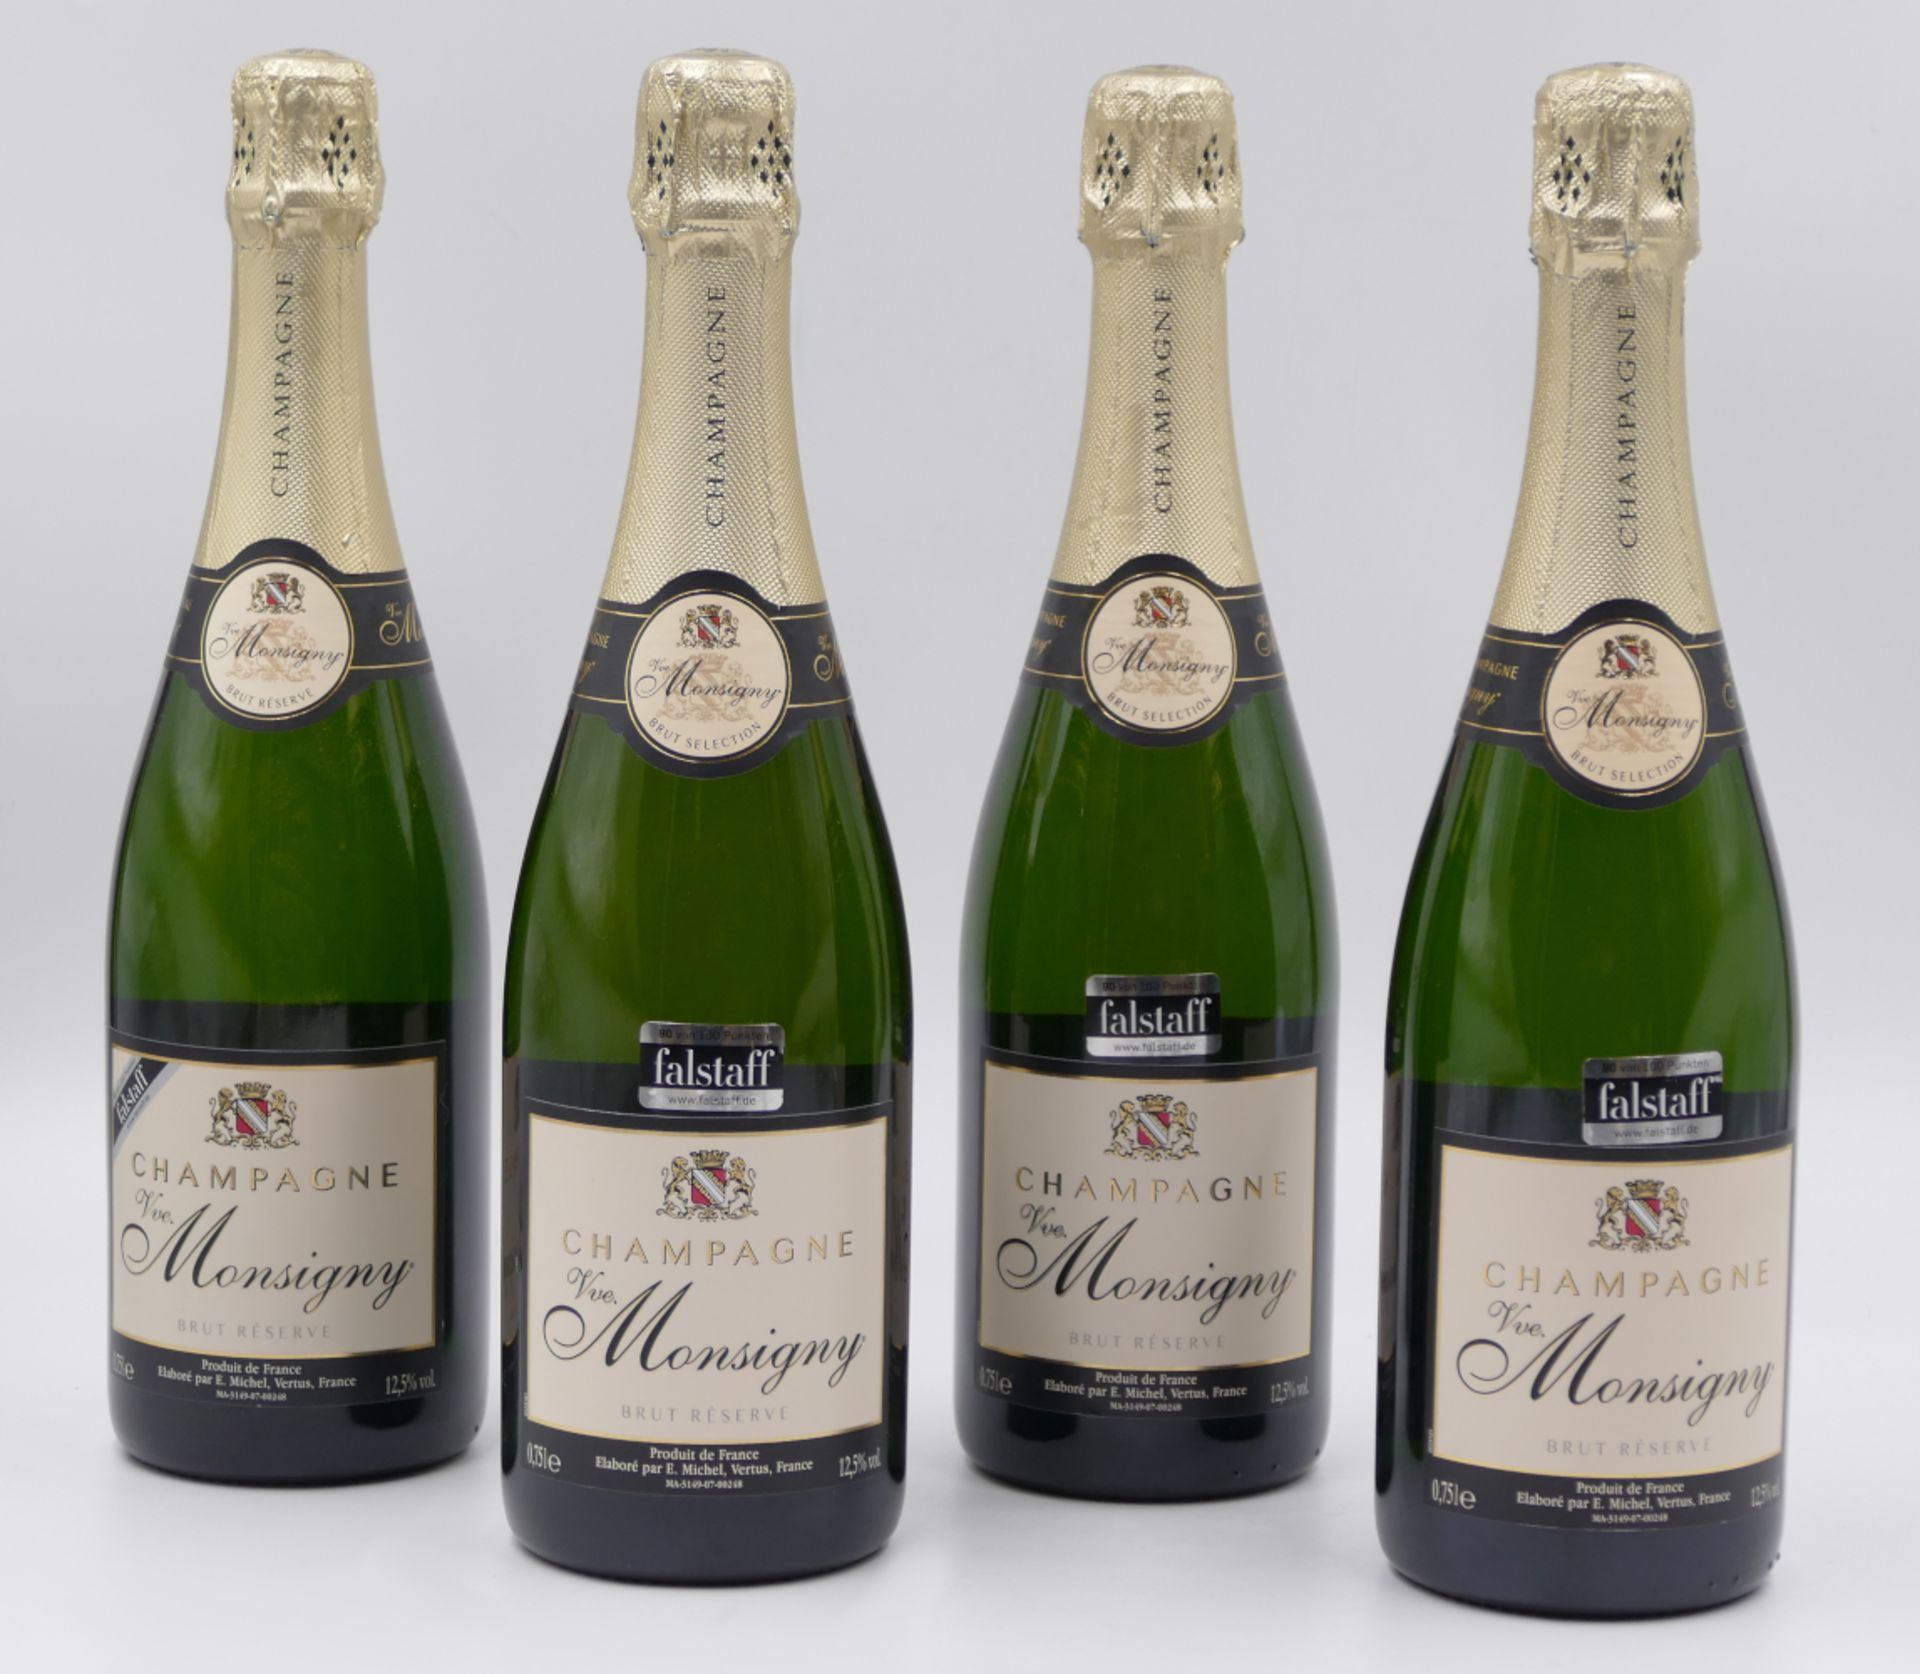 4 Flaschen "Champagne Vue. Monsigny Brut Réserve" je 0,75 Liter, je 12,5%, je Asp.